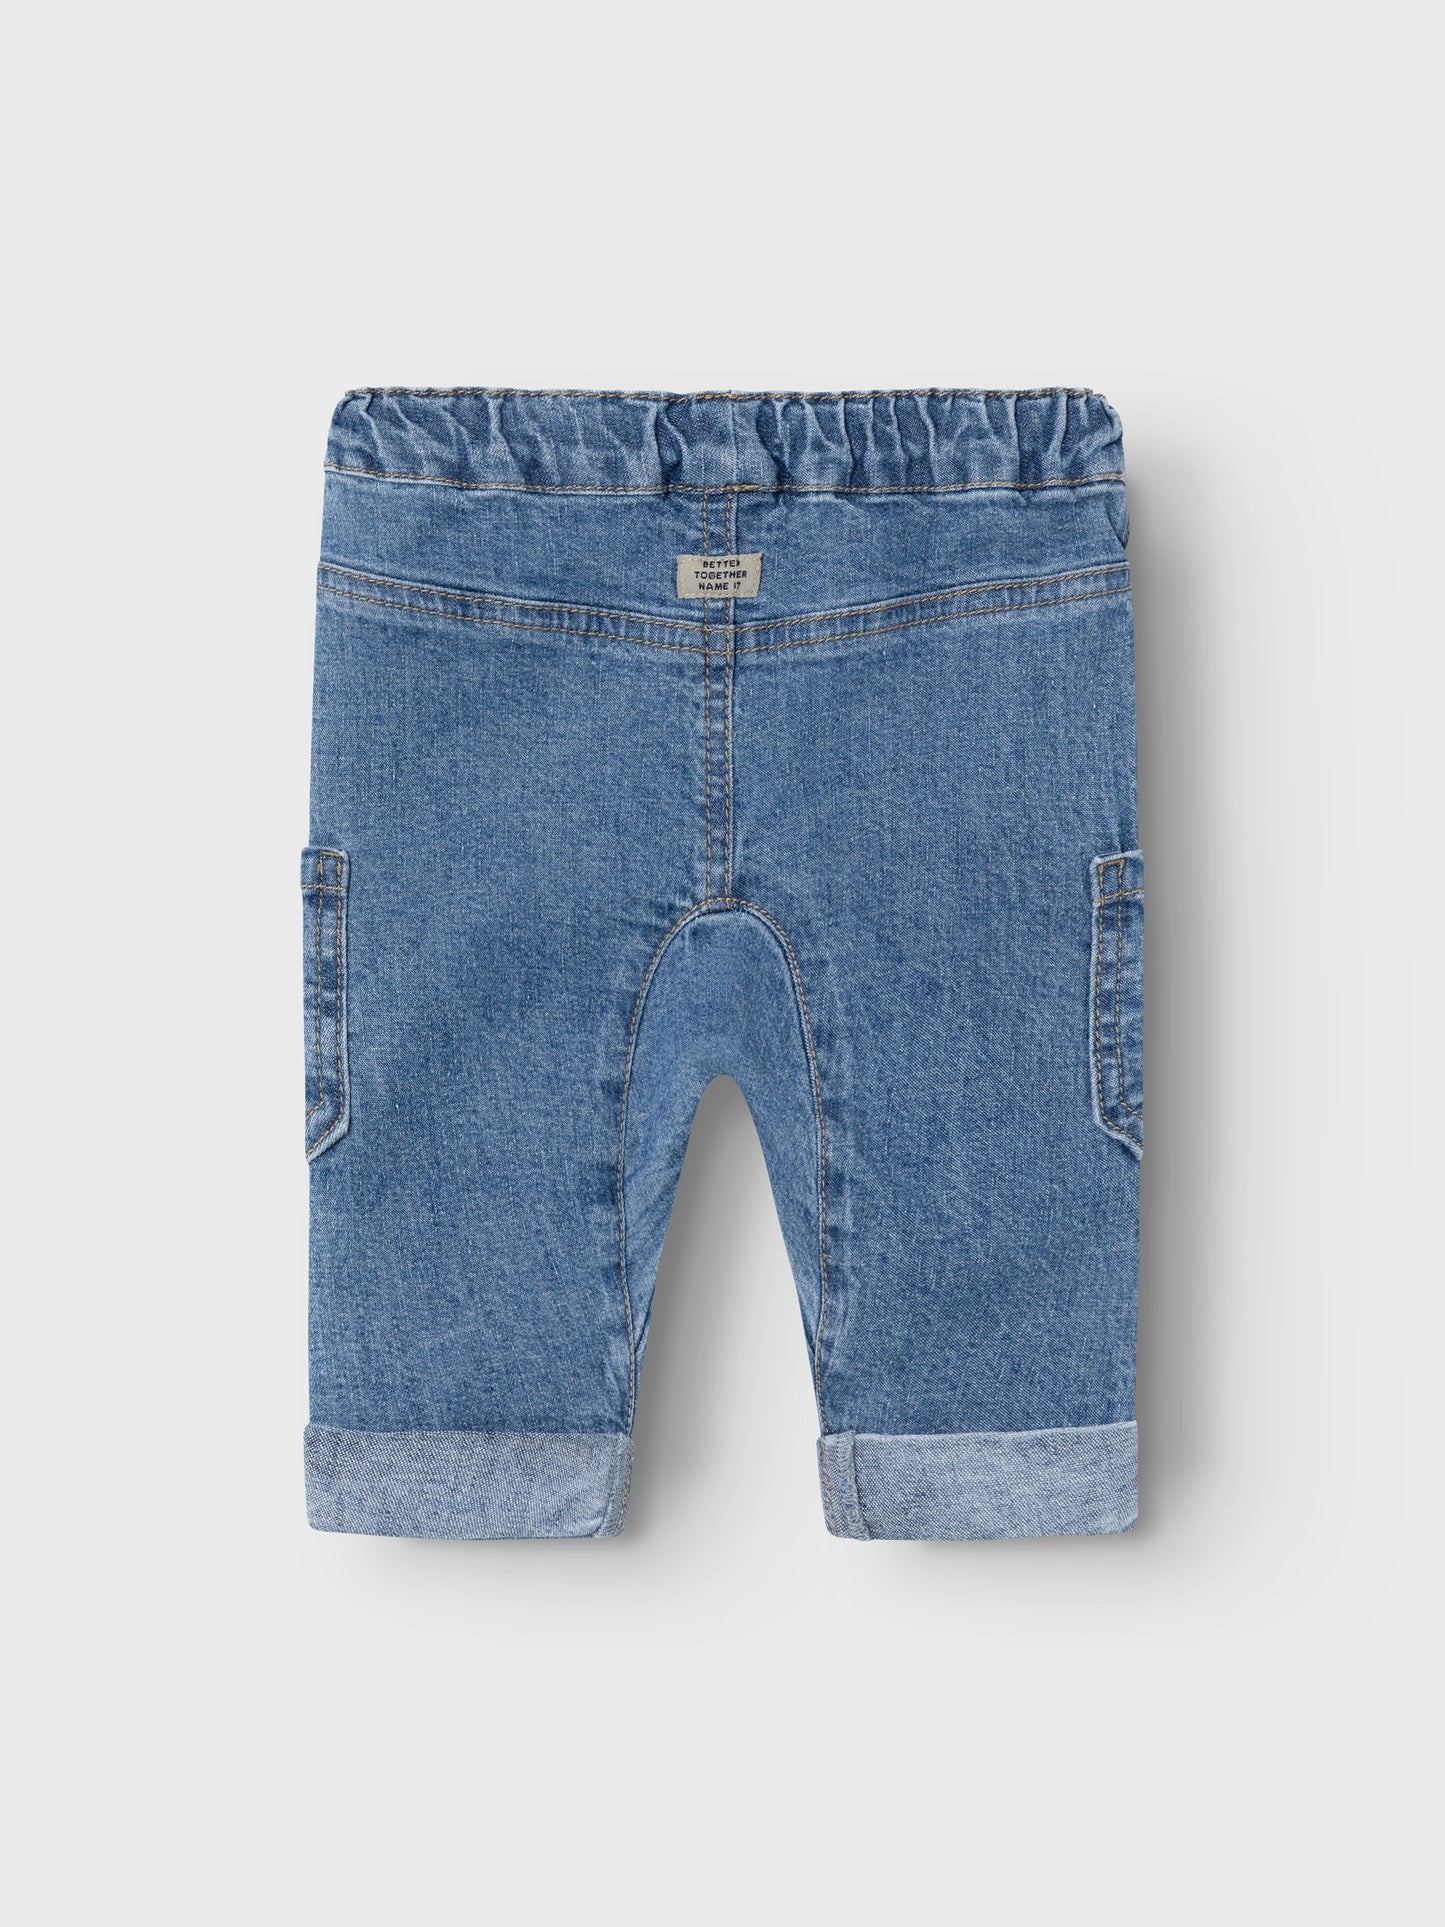 Name it - Ben jeans - Dark blue denim